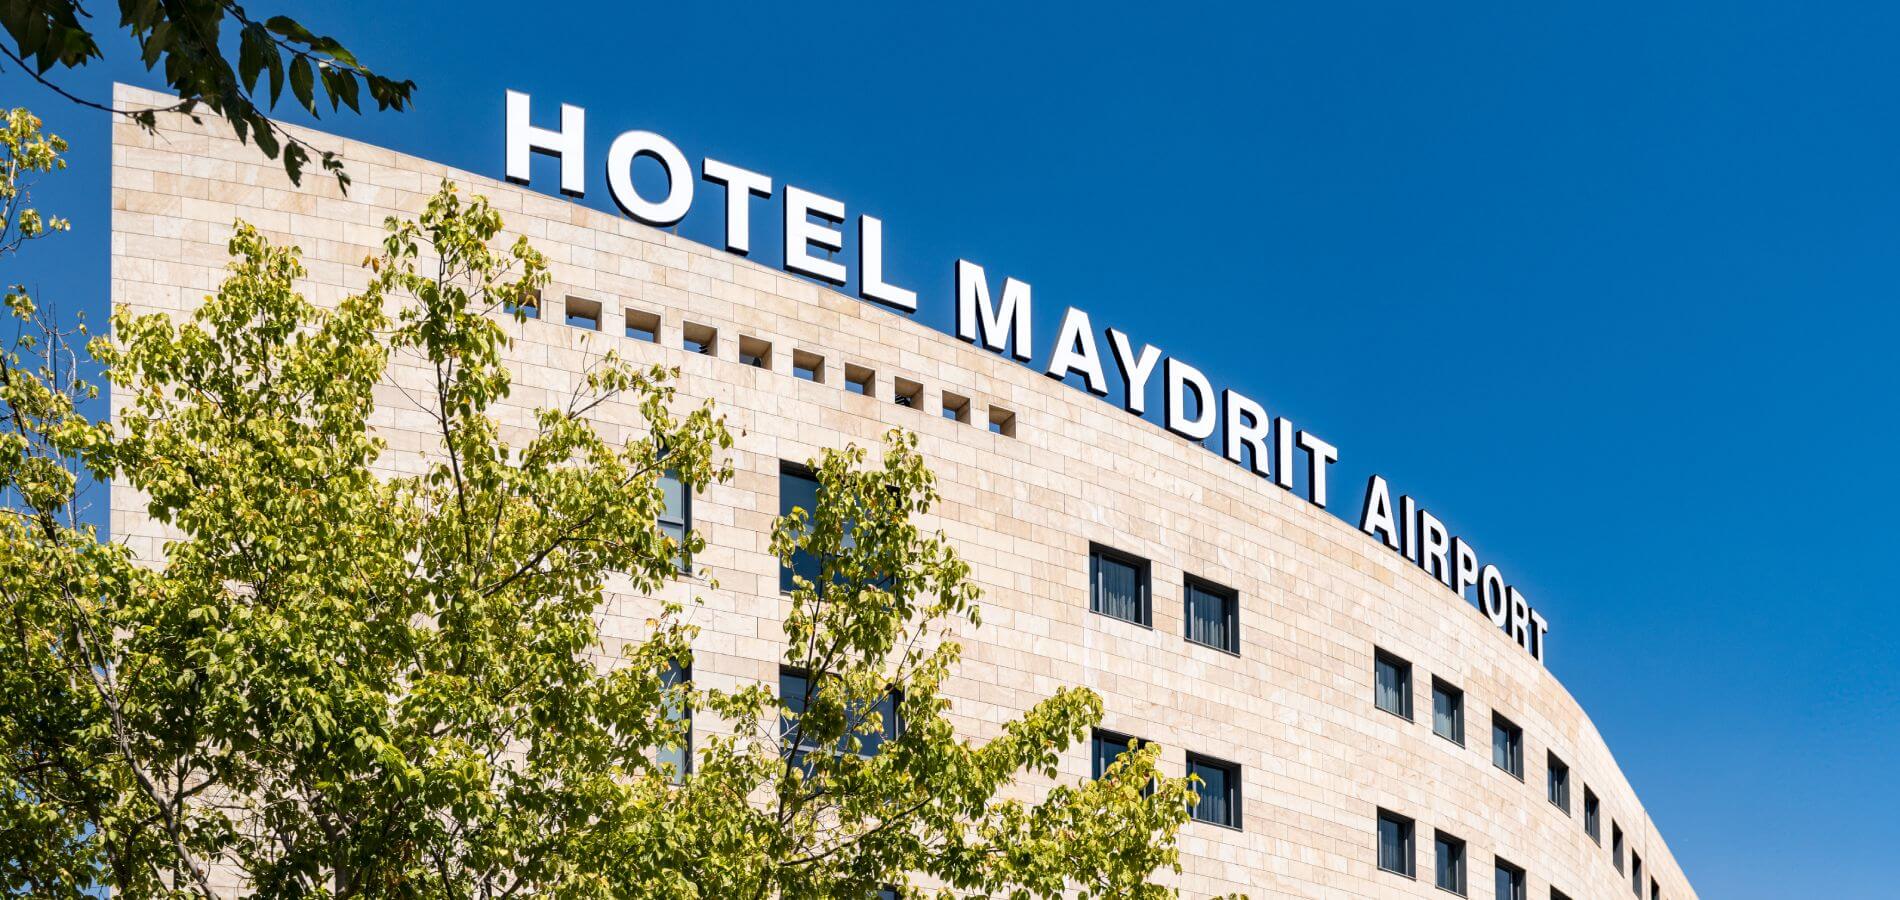 Hotel Santos Maydrit